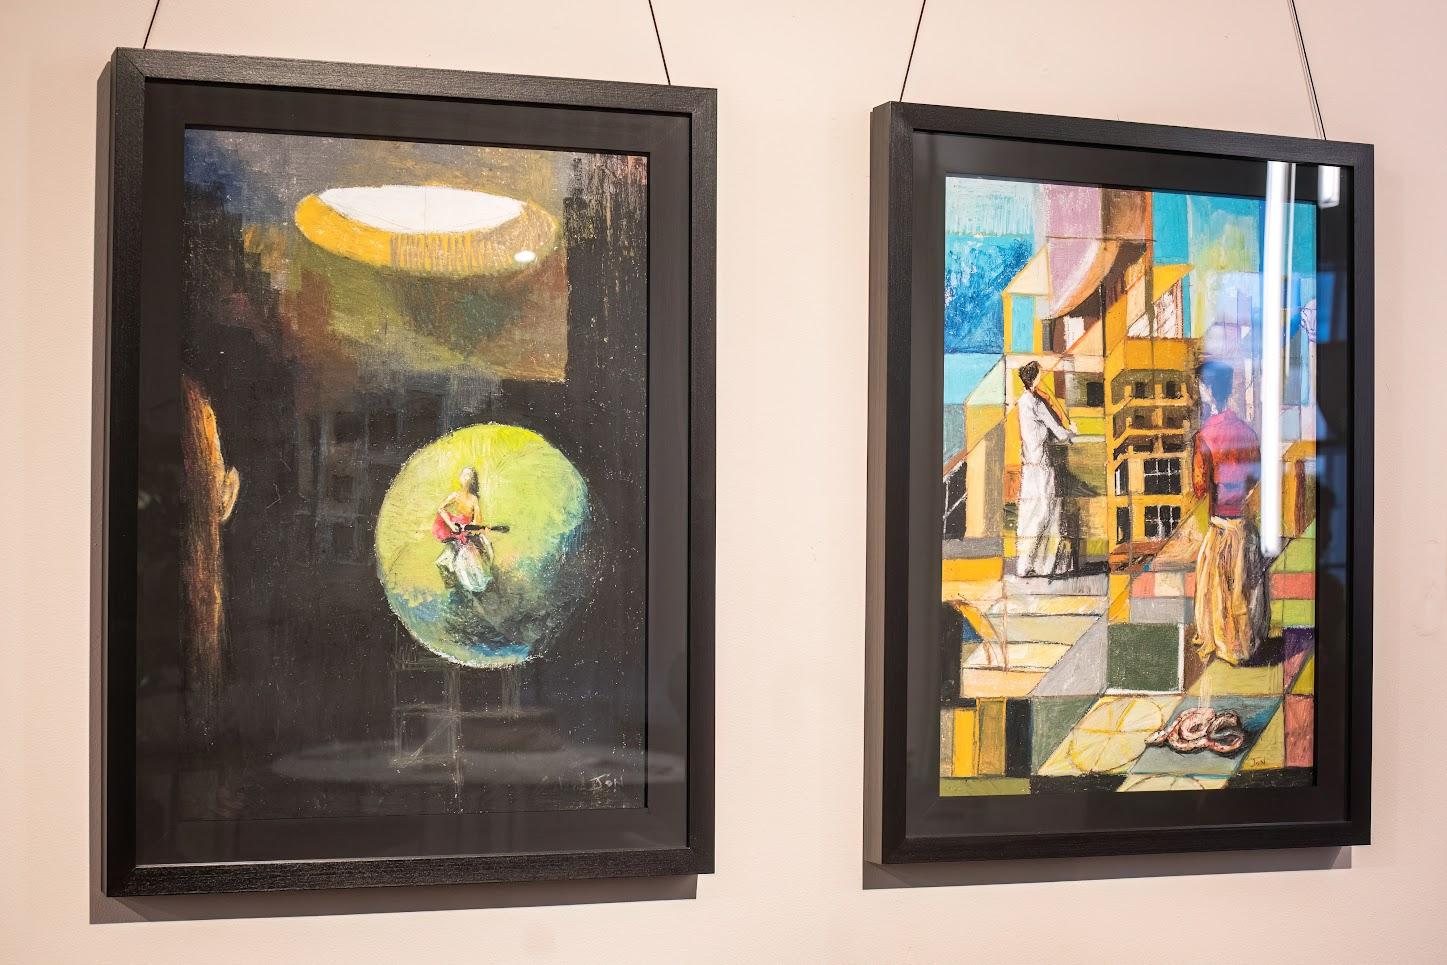 Two works by Jon Grech on display at Camilleri Paris Mode in Rabat.